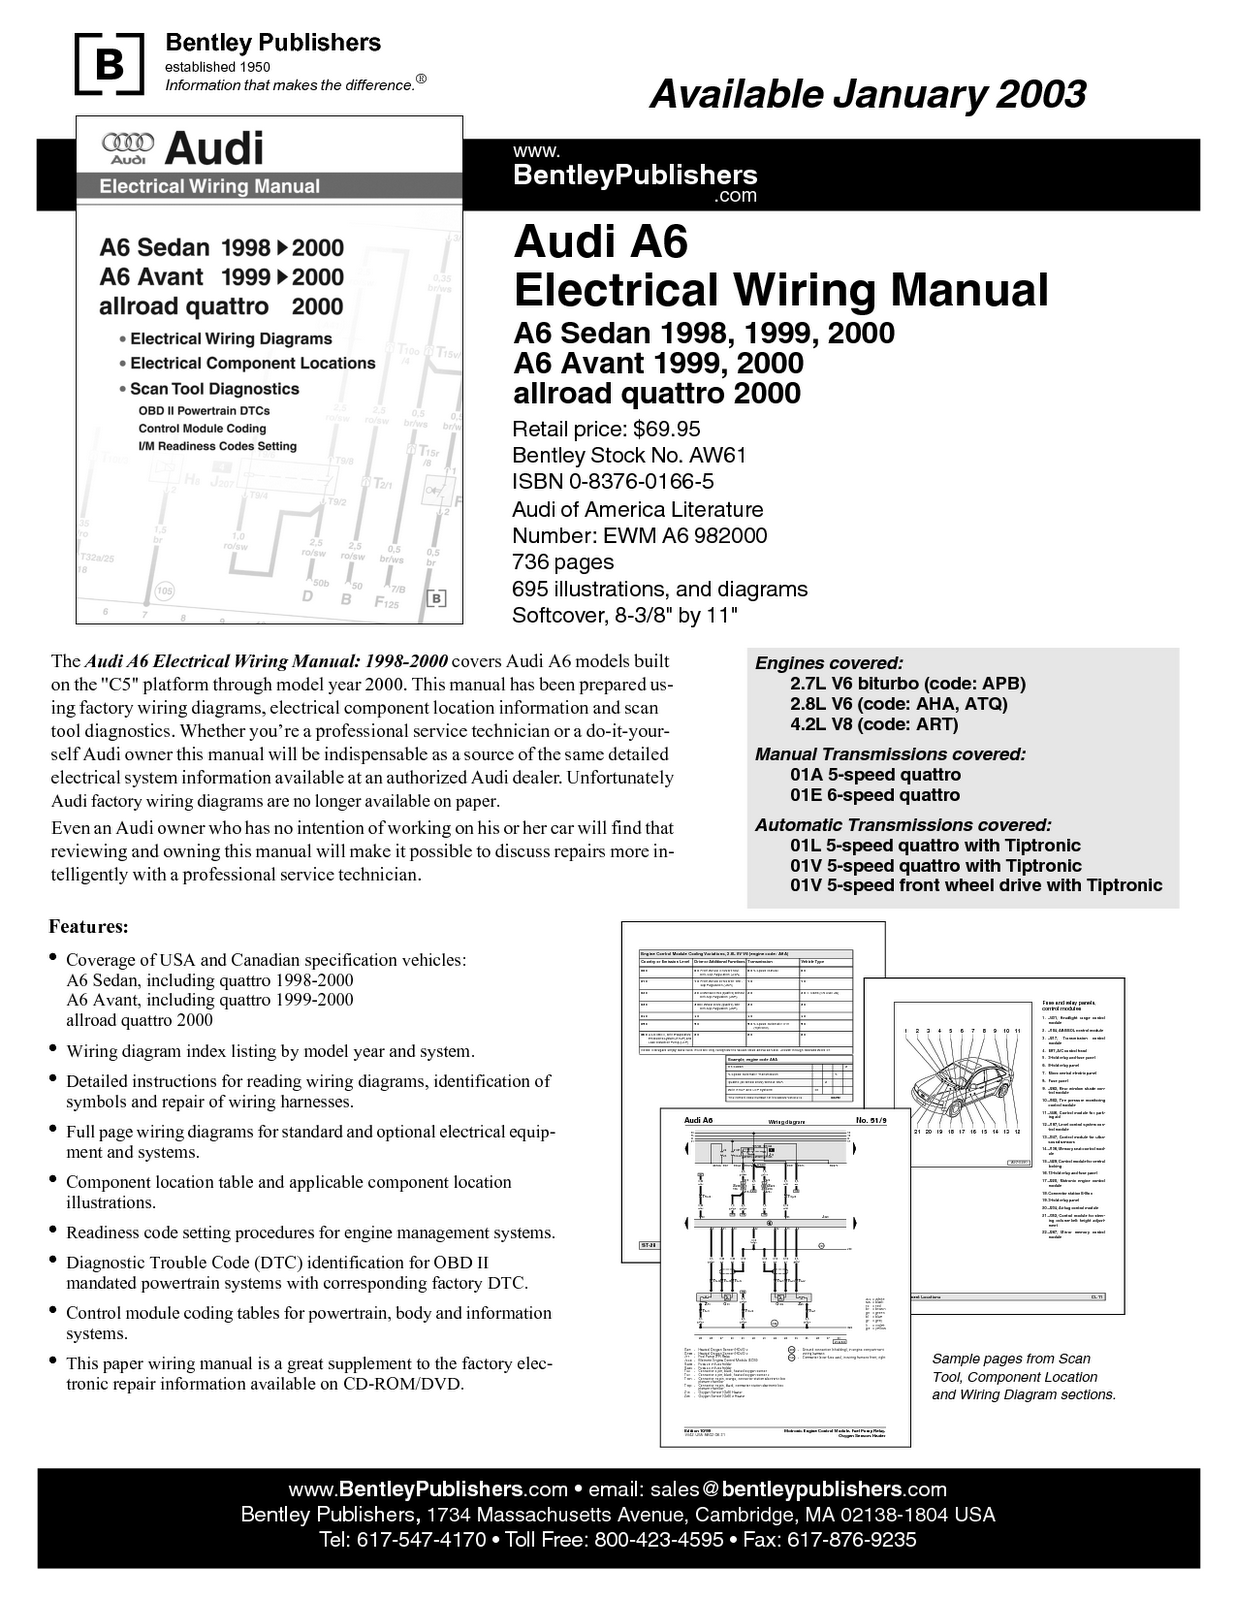 Electrical Wiring Manual 2003 Audi A6 | Free Online Manual